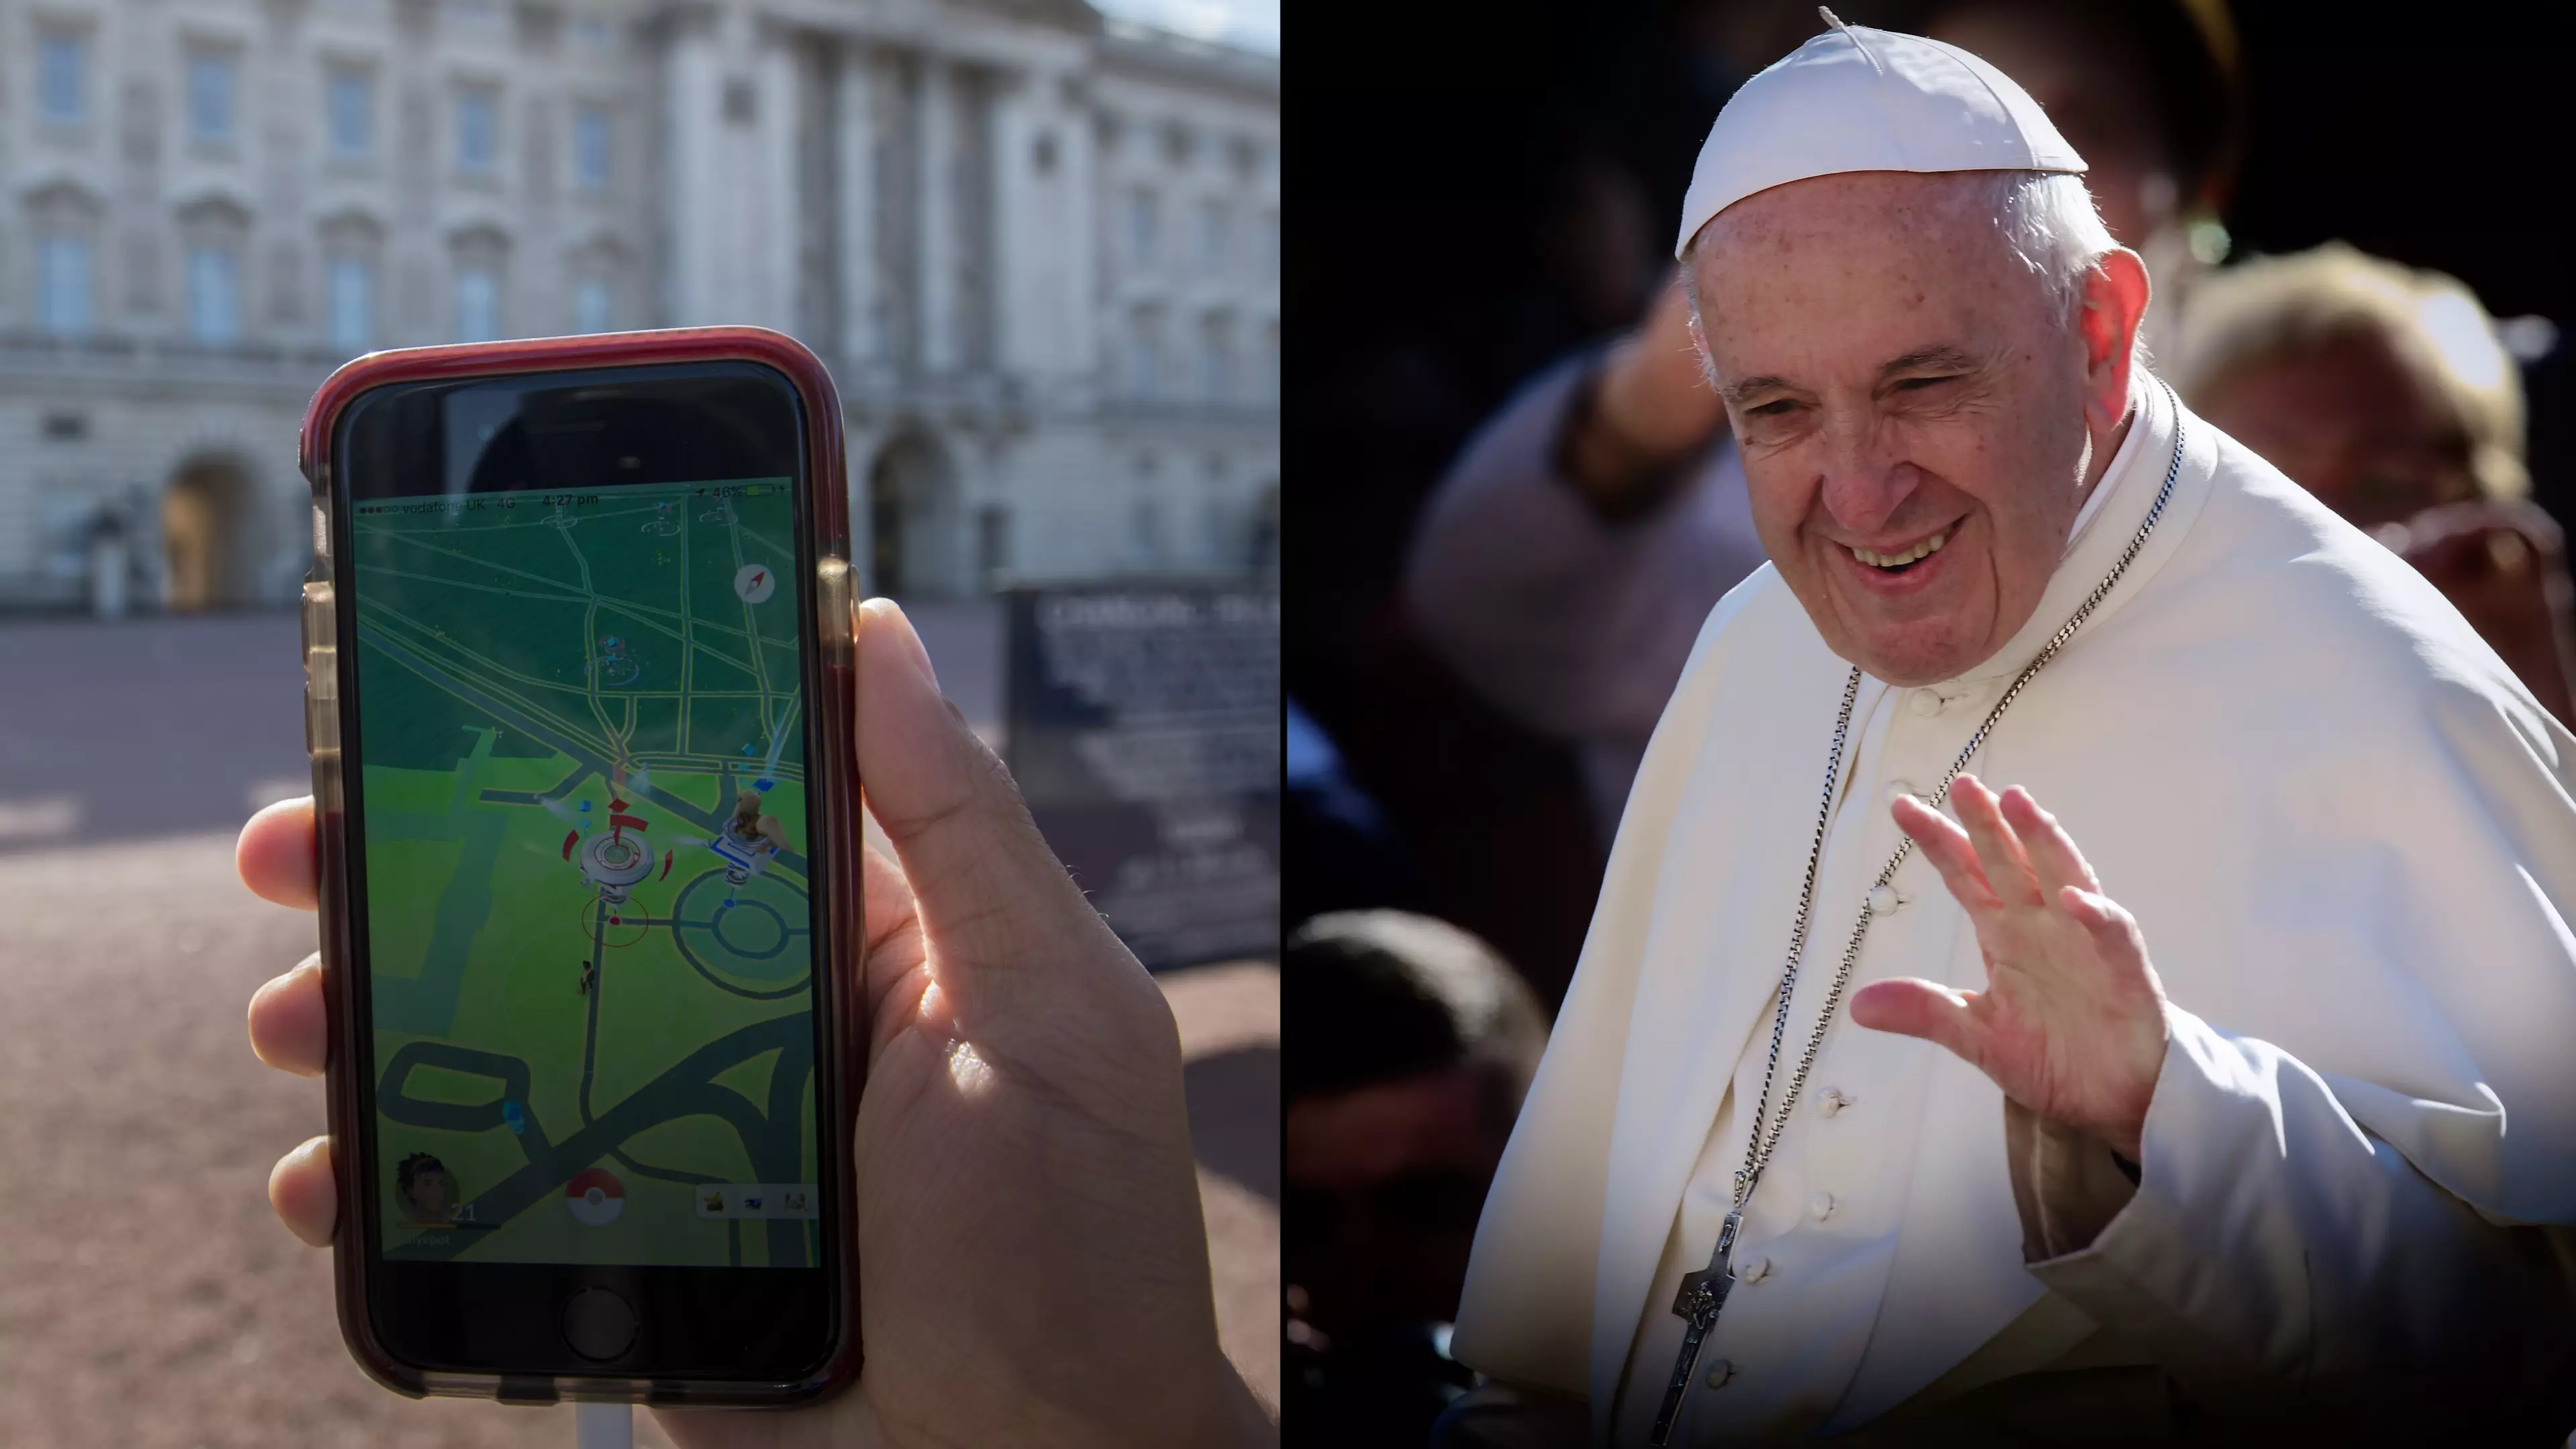 The Catholic Church Releases 'Pokémon Go' Style Game